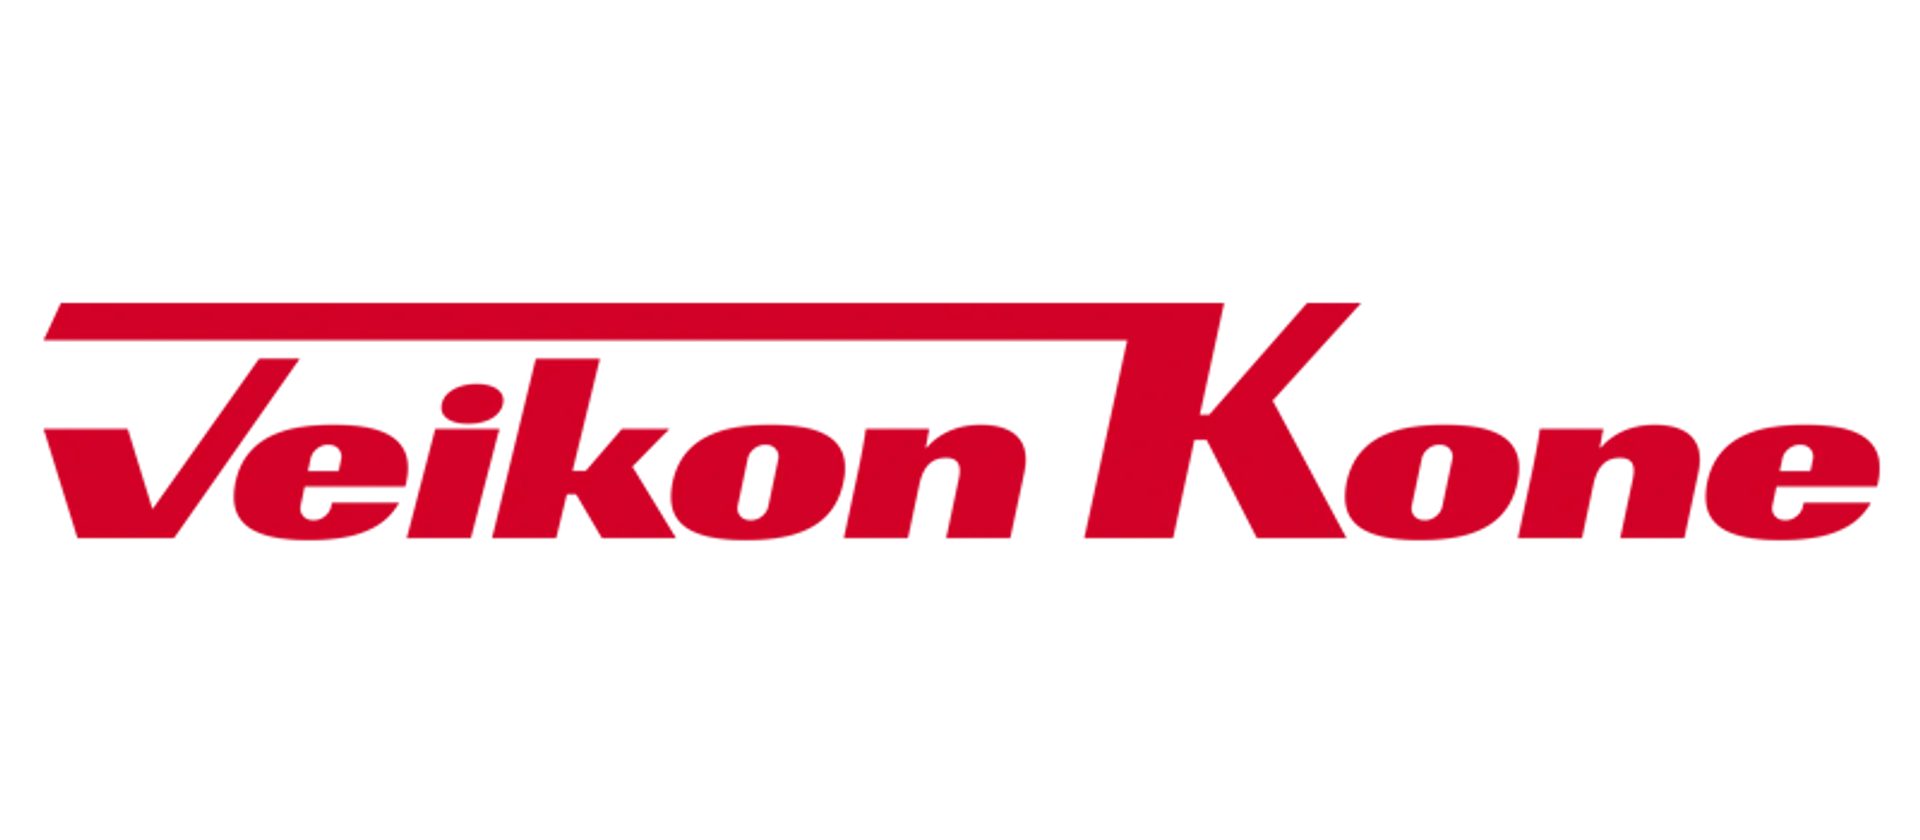 VEIKON KONE logo